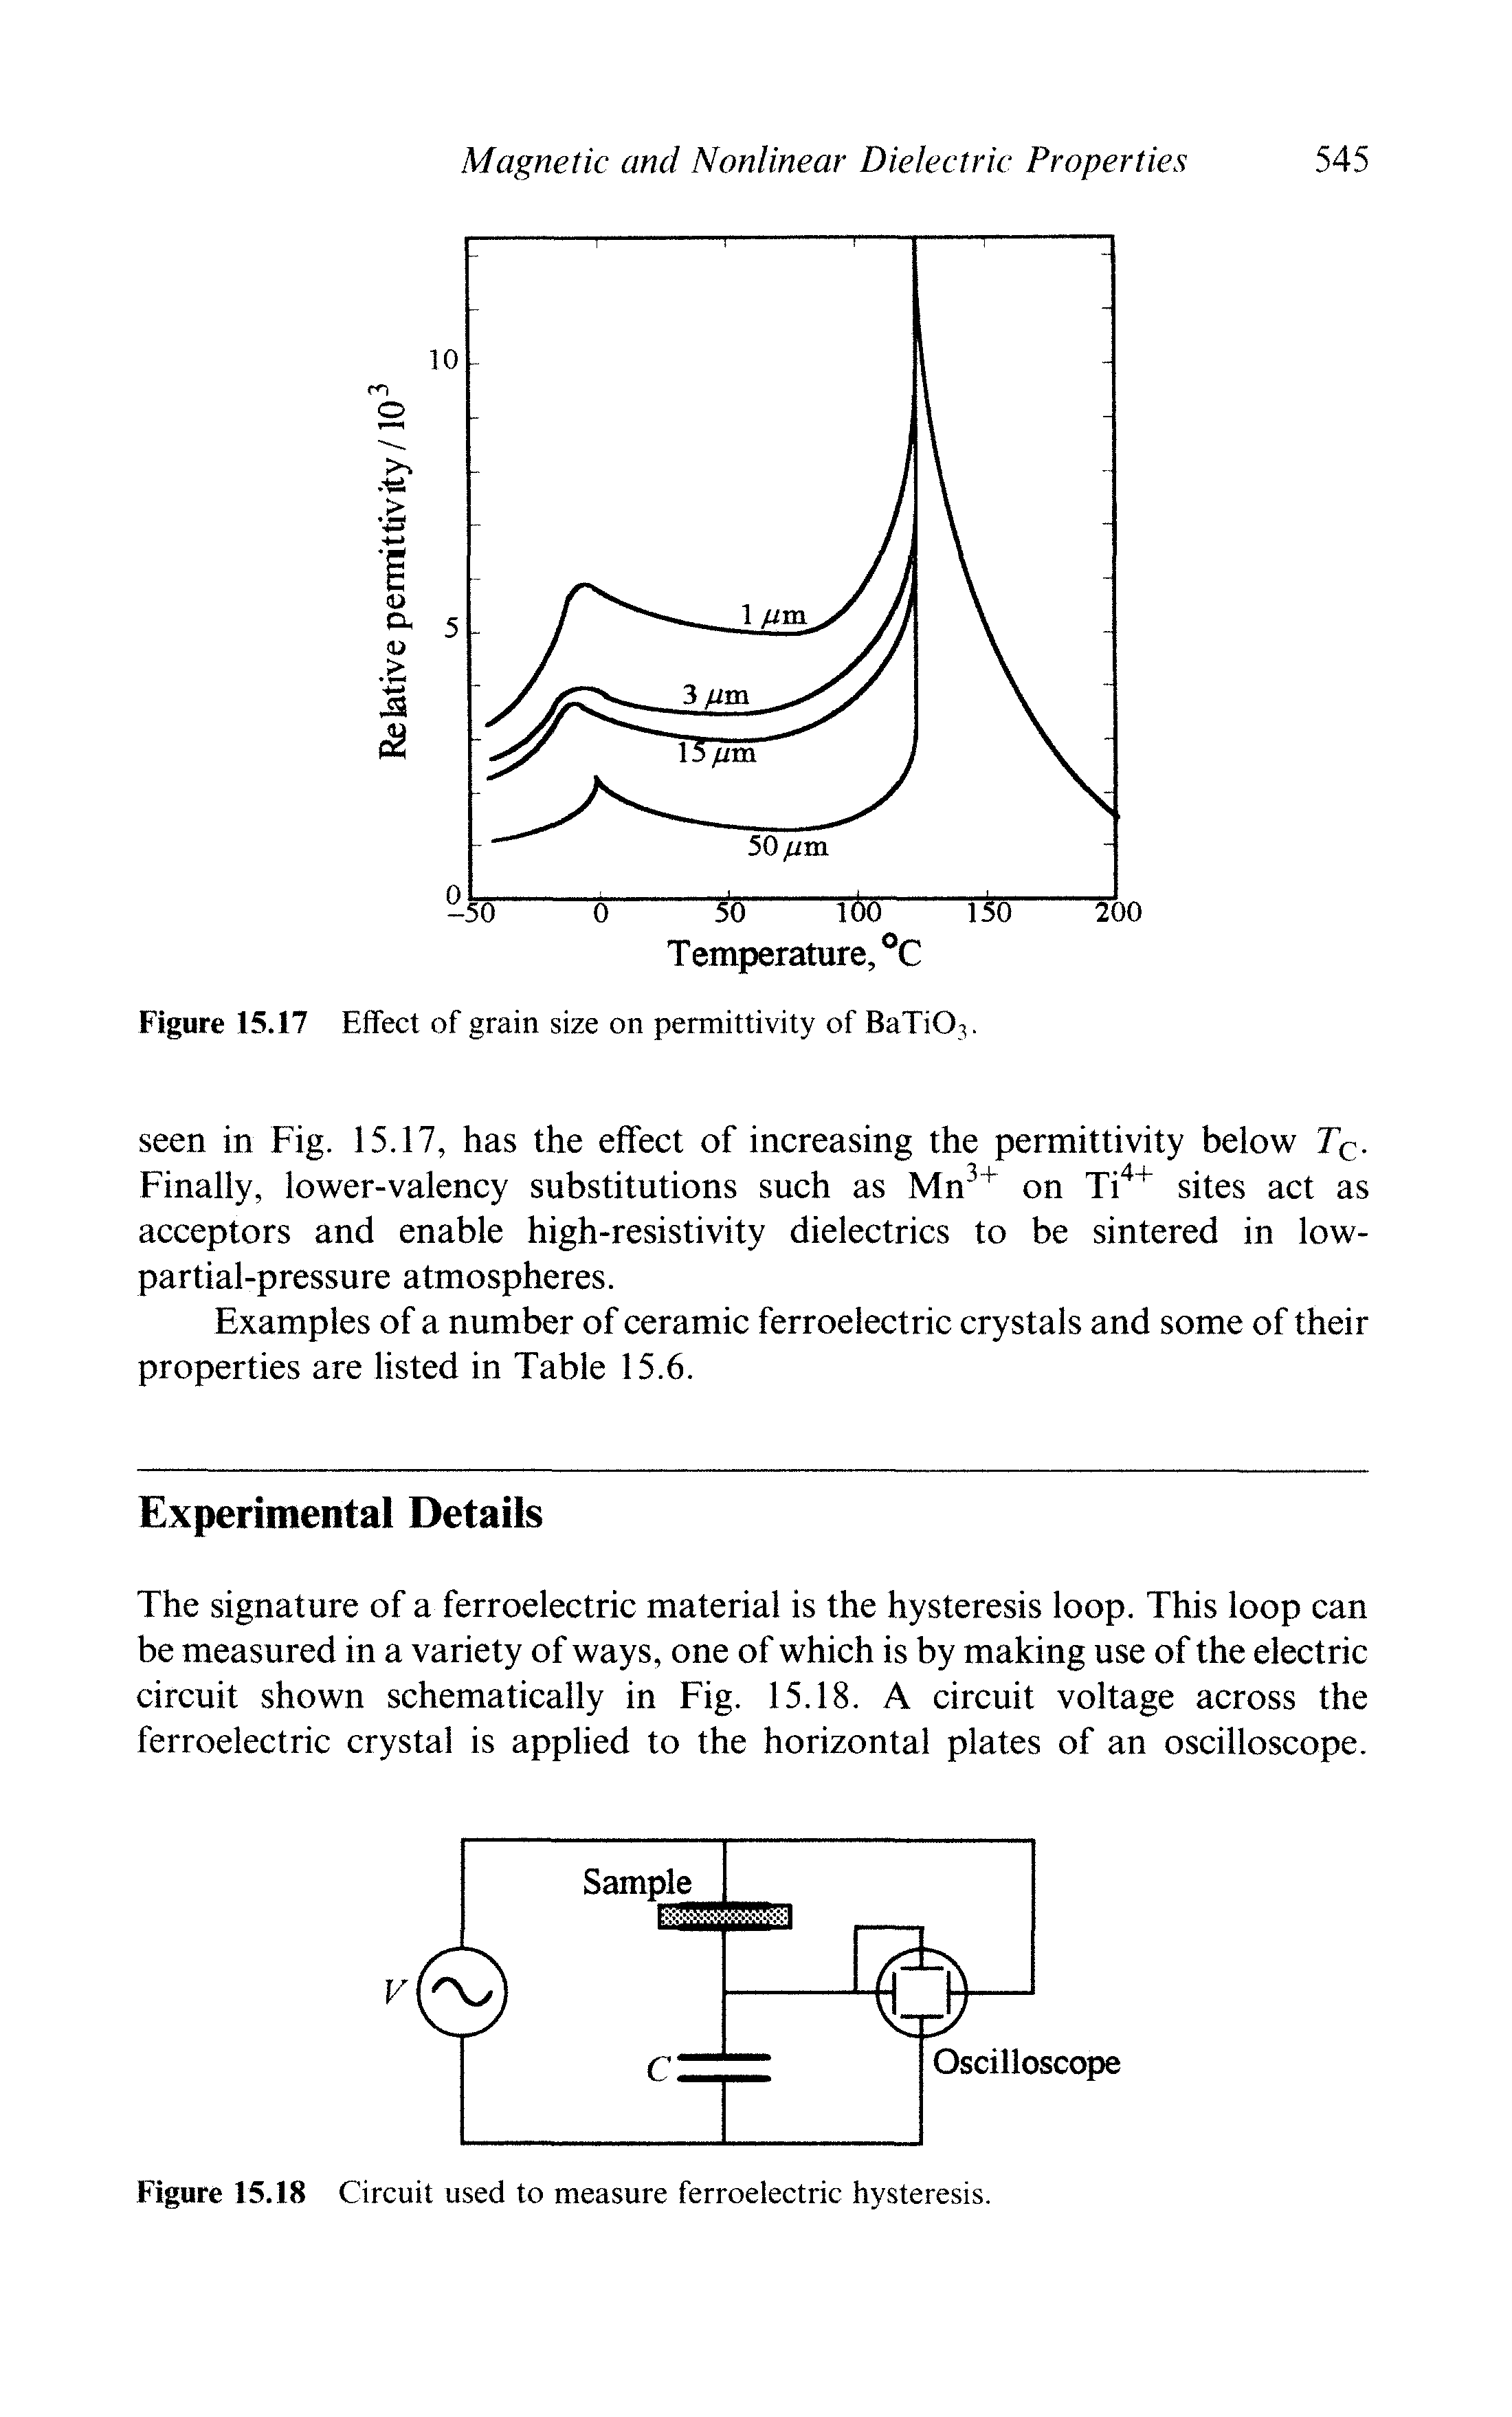 Figure 15.18 Circuit used to measure ferroelectric hysteresis.